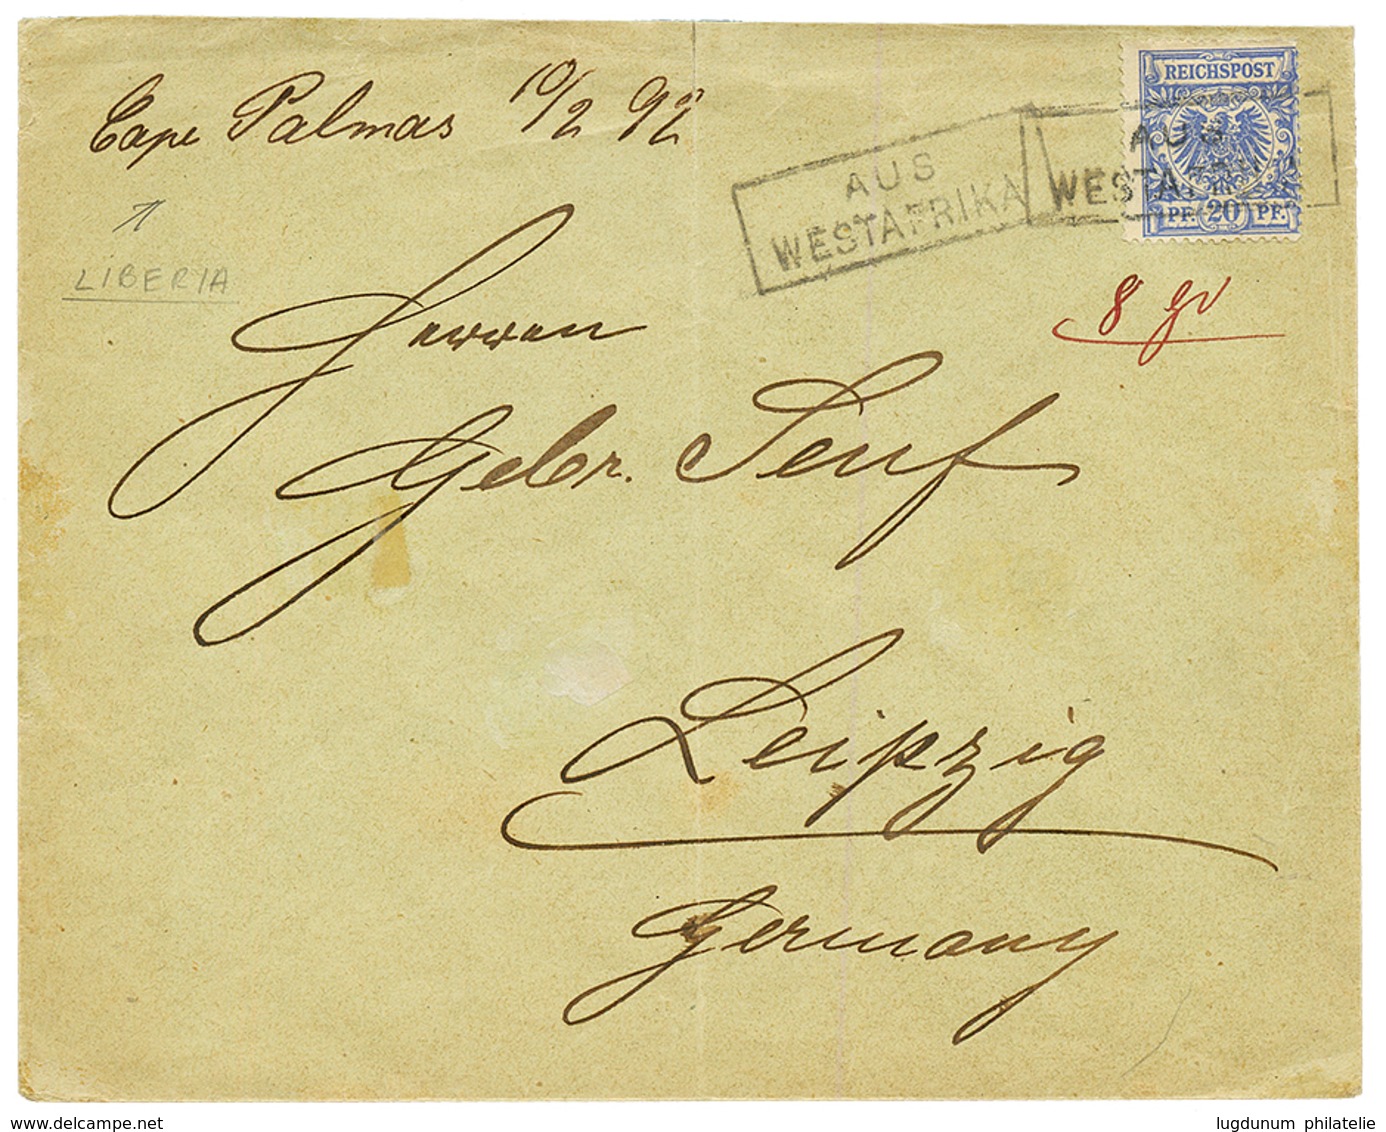 LIBERIA : 1892 GERMANY 20pf Canc. AUS WESTAFRIKA + "CAPE PALMAS 10/2 92" On Envelope To GERMANY. Vvf. - Liberia